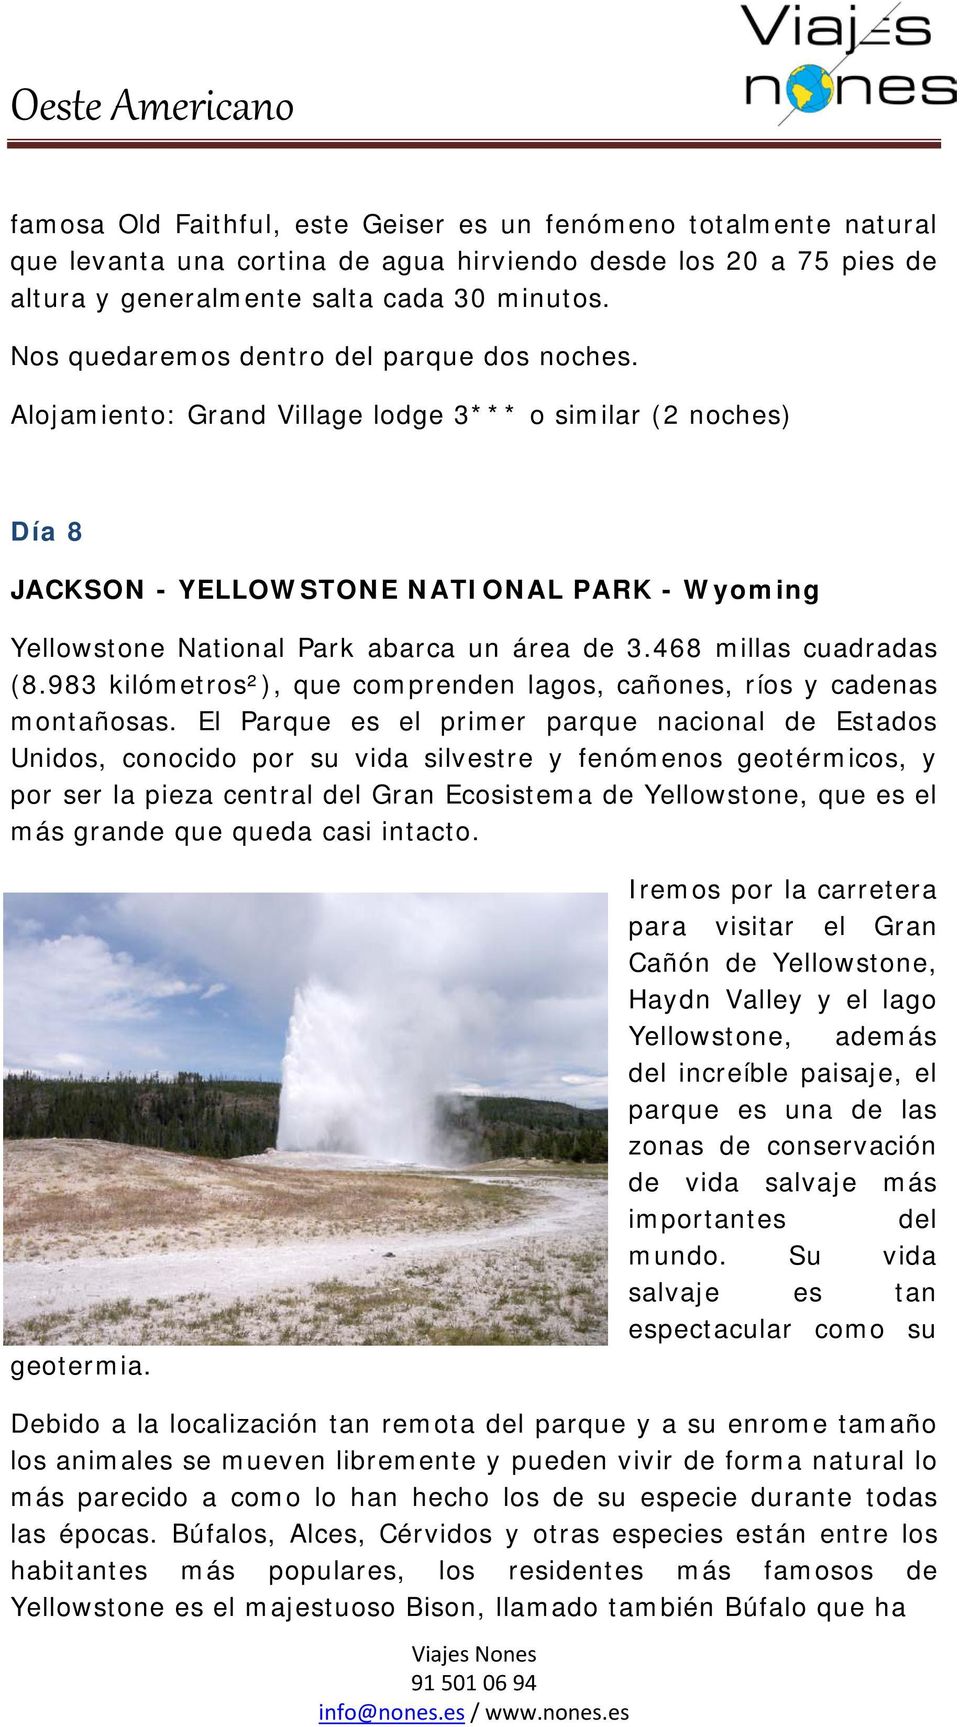 Alojamiento: Grand Village lodge 3*** o similar (2 noches) Día 8 JACKSON - YELLOWSTONE NATIONAL PARK - Wyoming Yellowstone National Park abarca un área de 3.468 millas cuadradas (8.